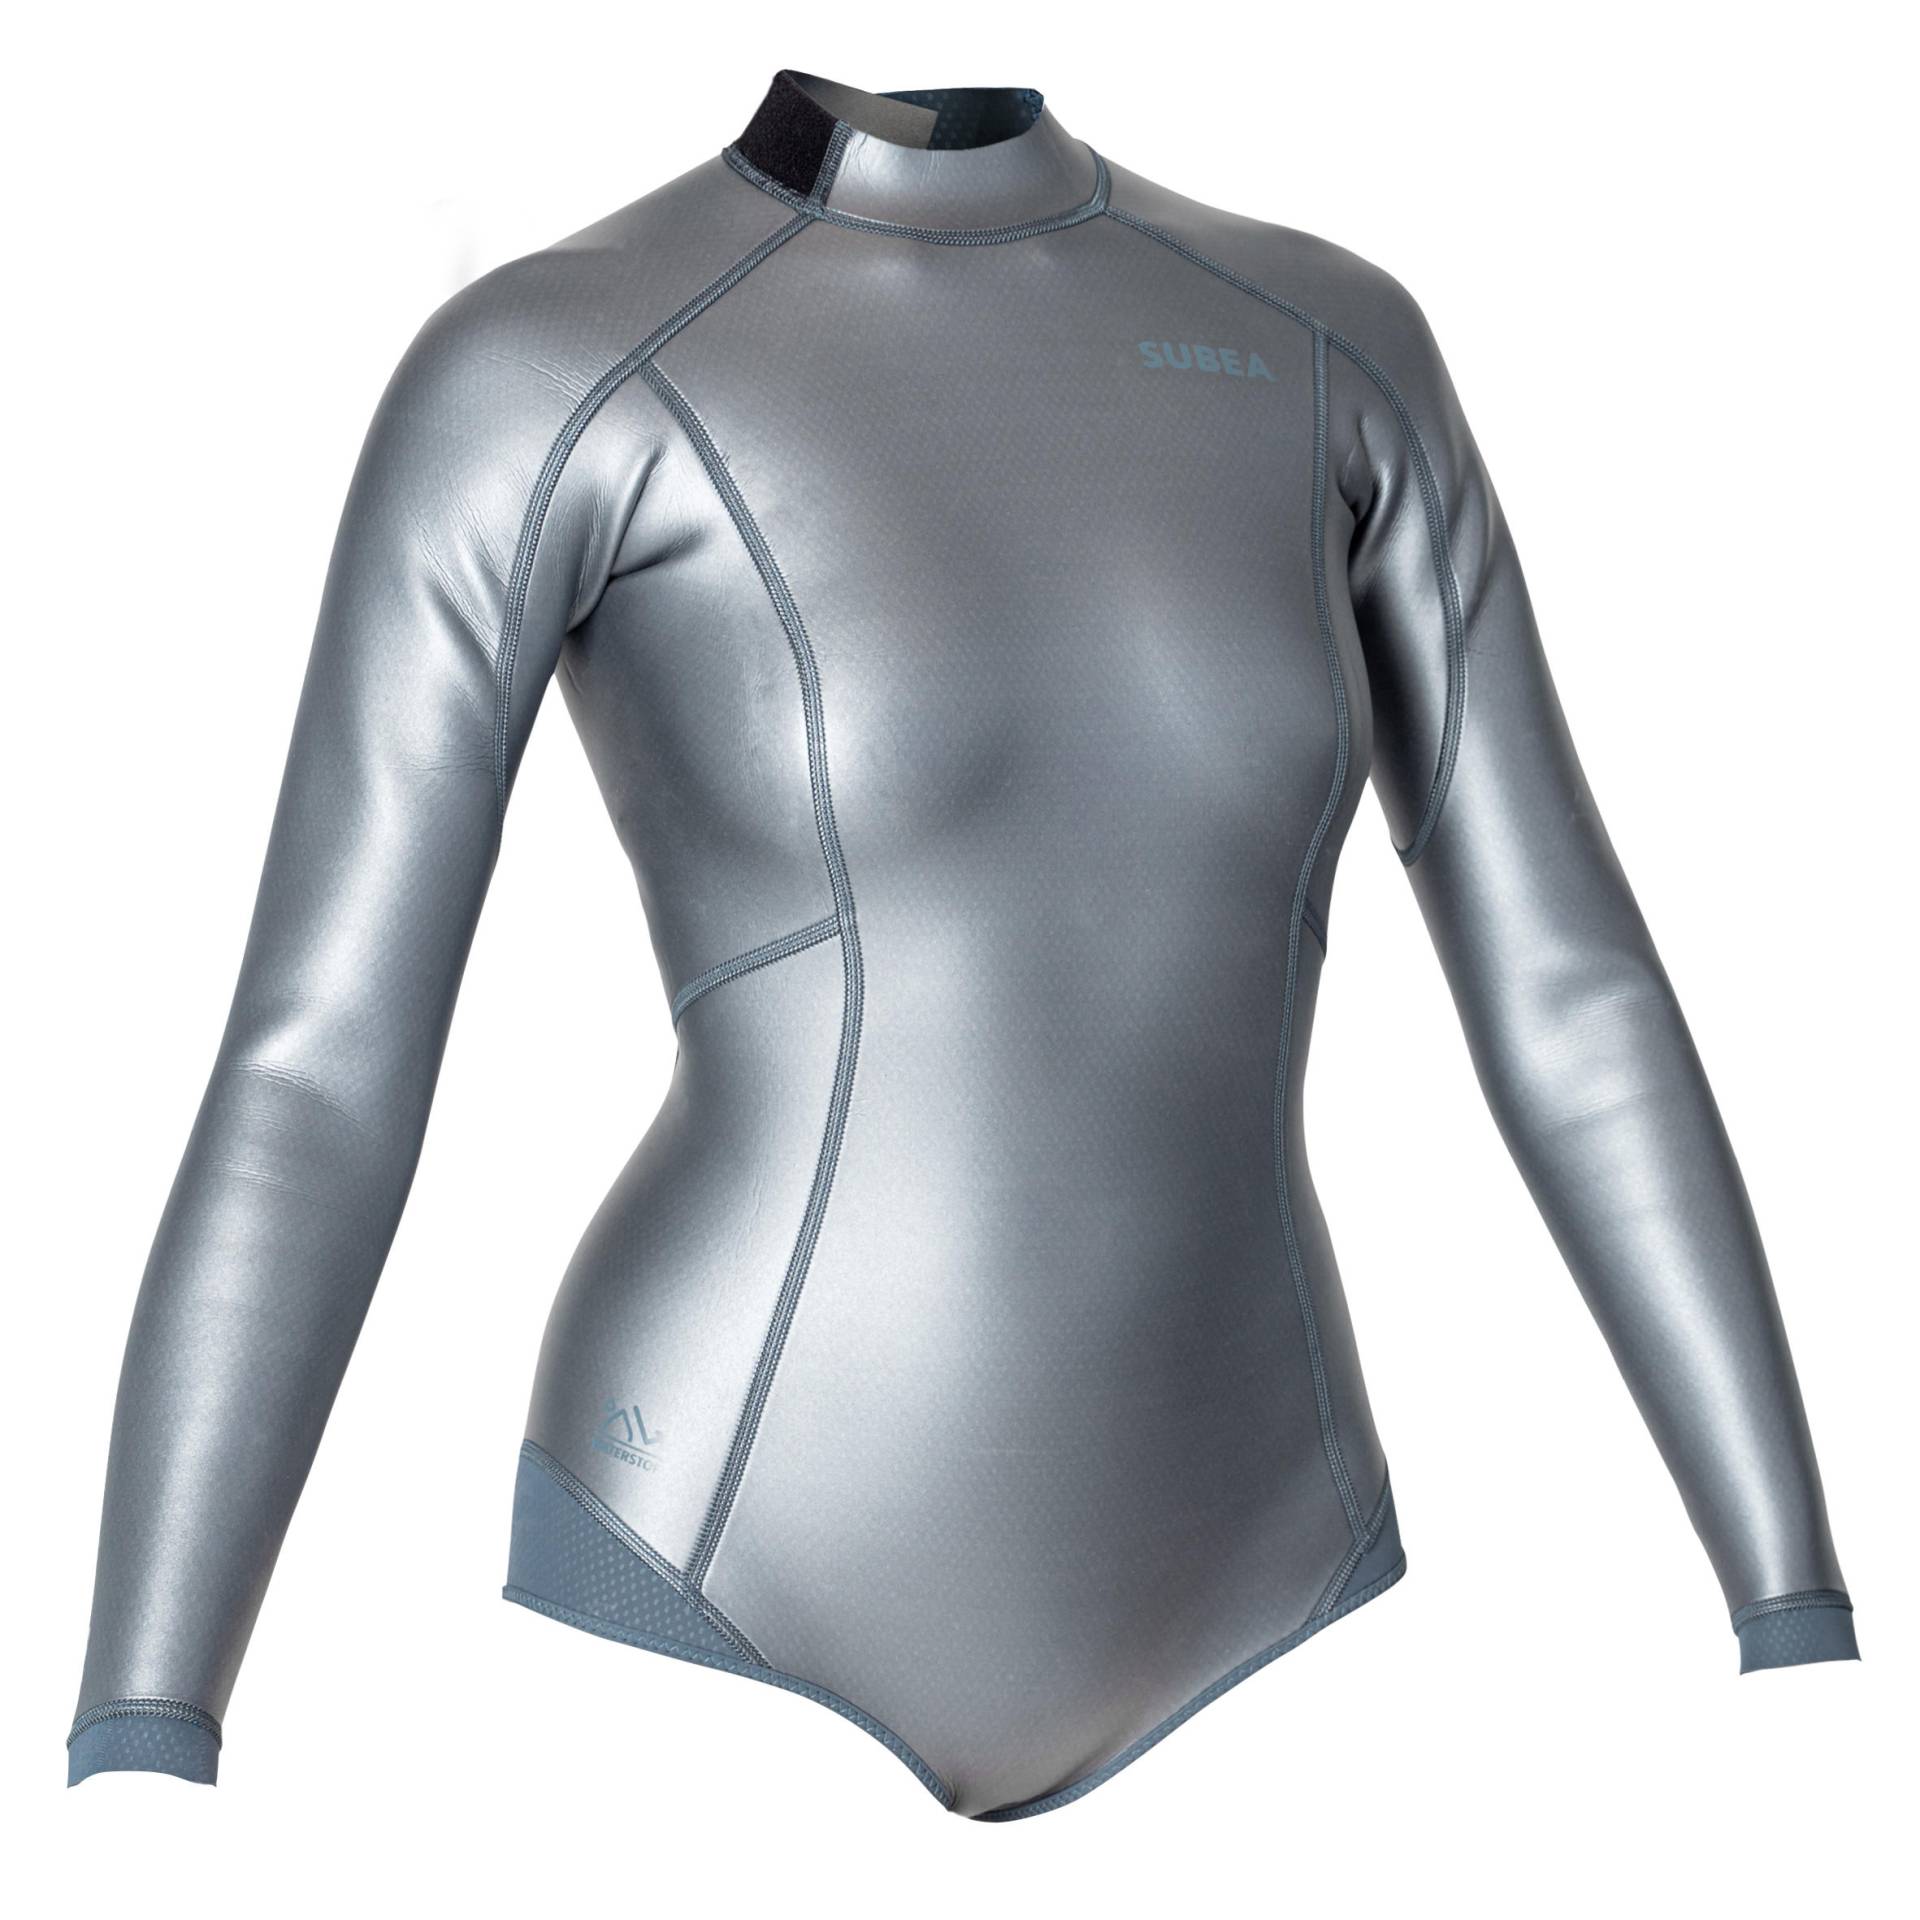 Neopren Shorty Freediving Langarm Damen 500 Glide Skin grau/metallic von SUBEA